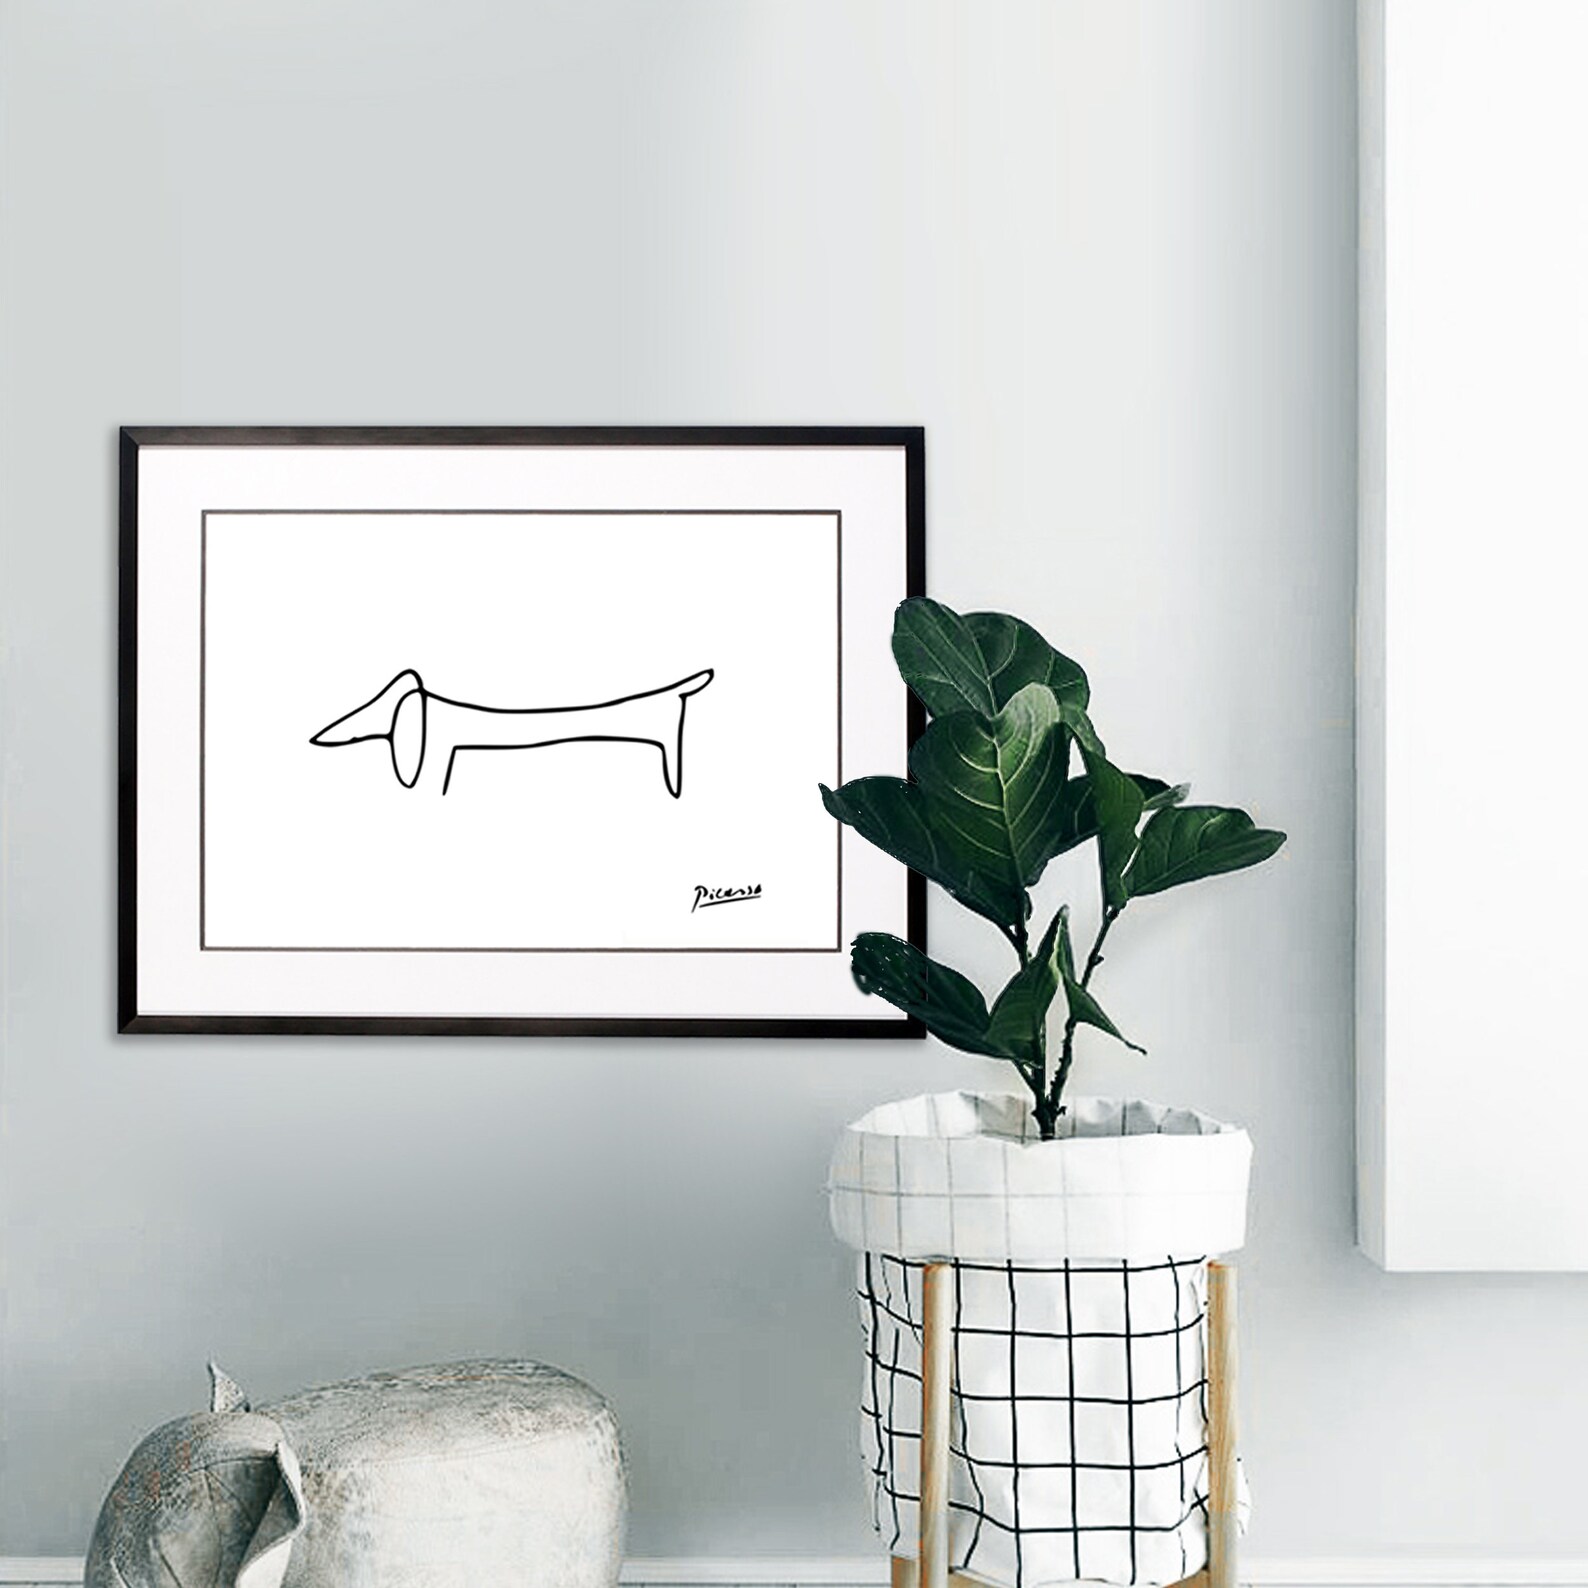 Framed Art on Picasso Weiner Dog Linedrawing Art Aluminum Wall - Etsy UK